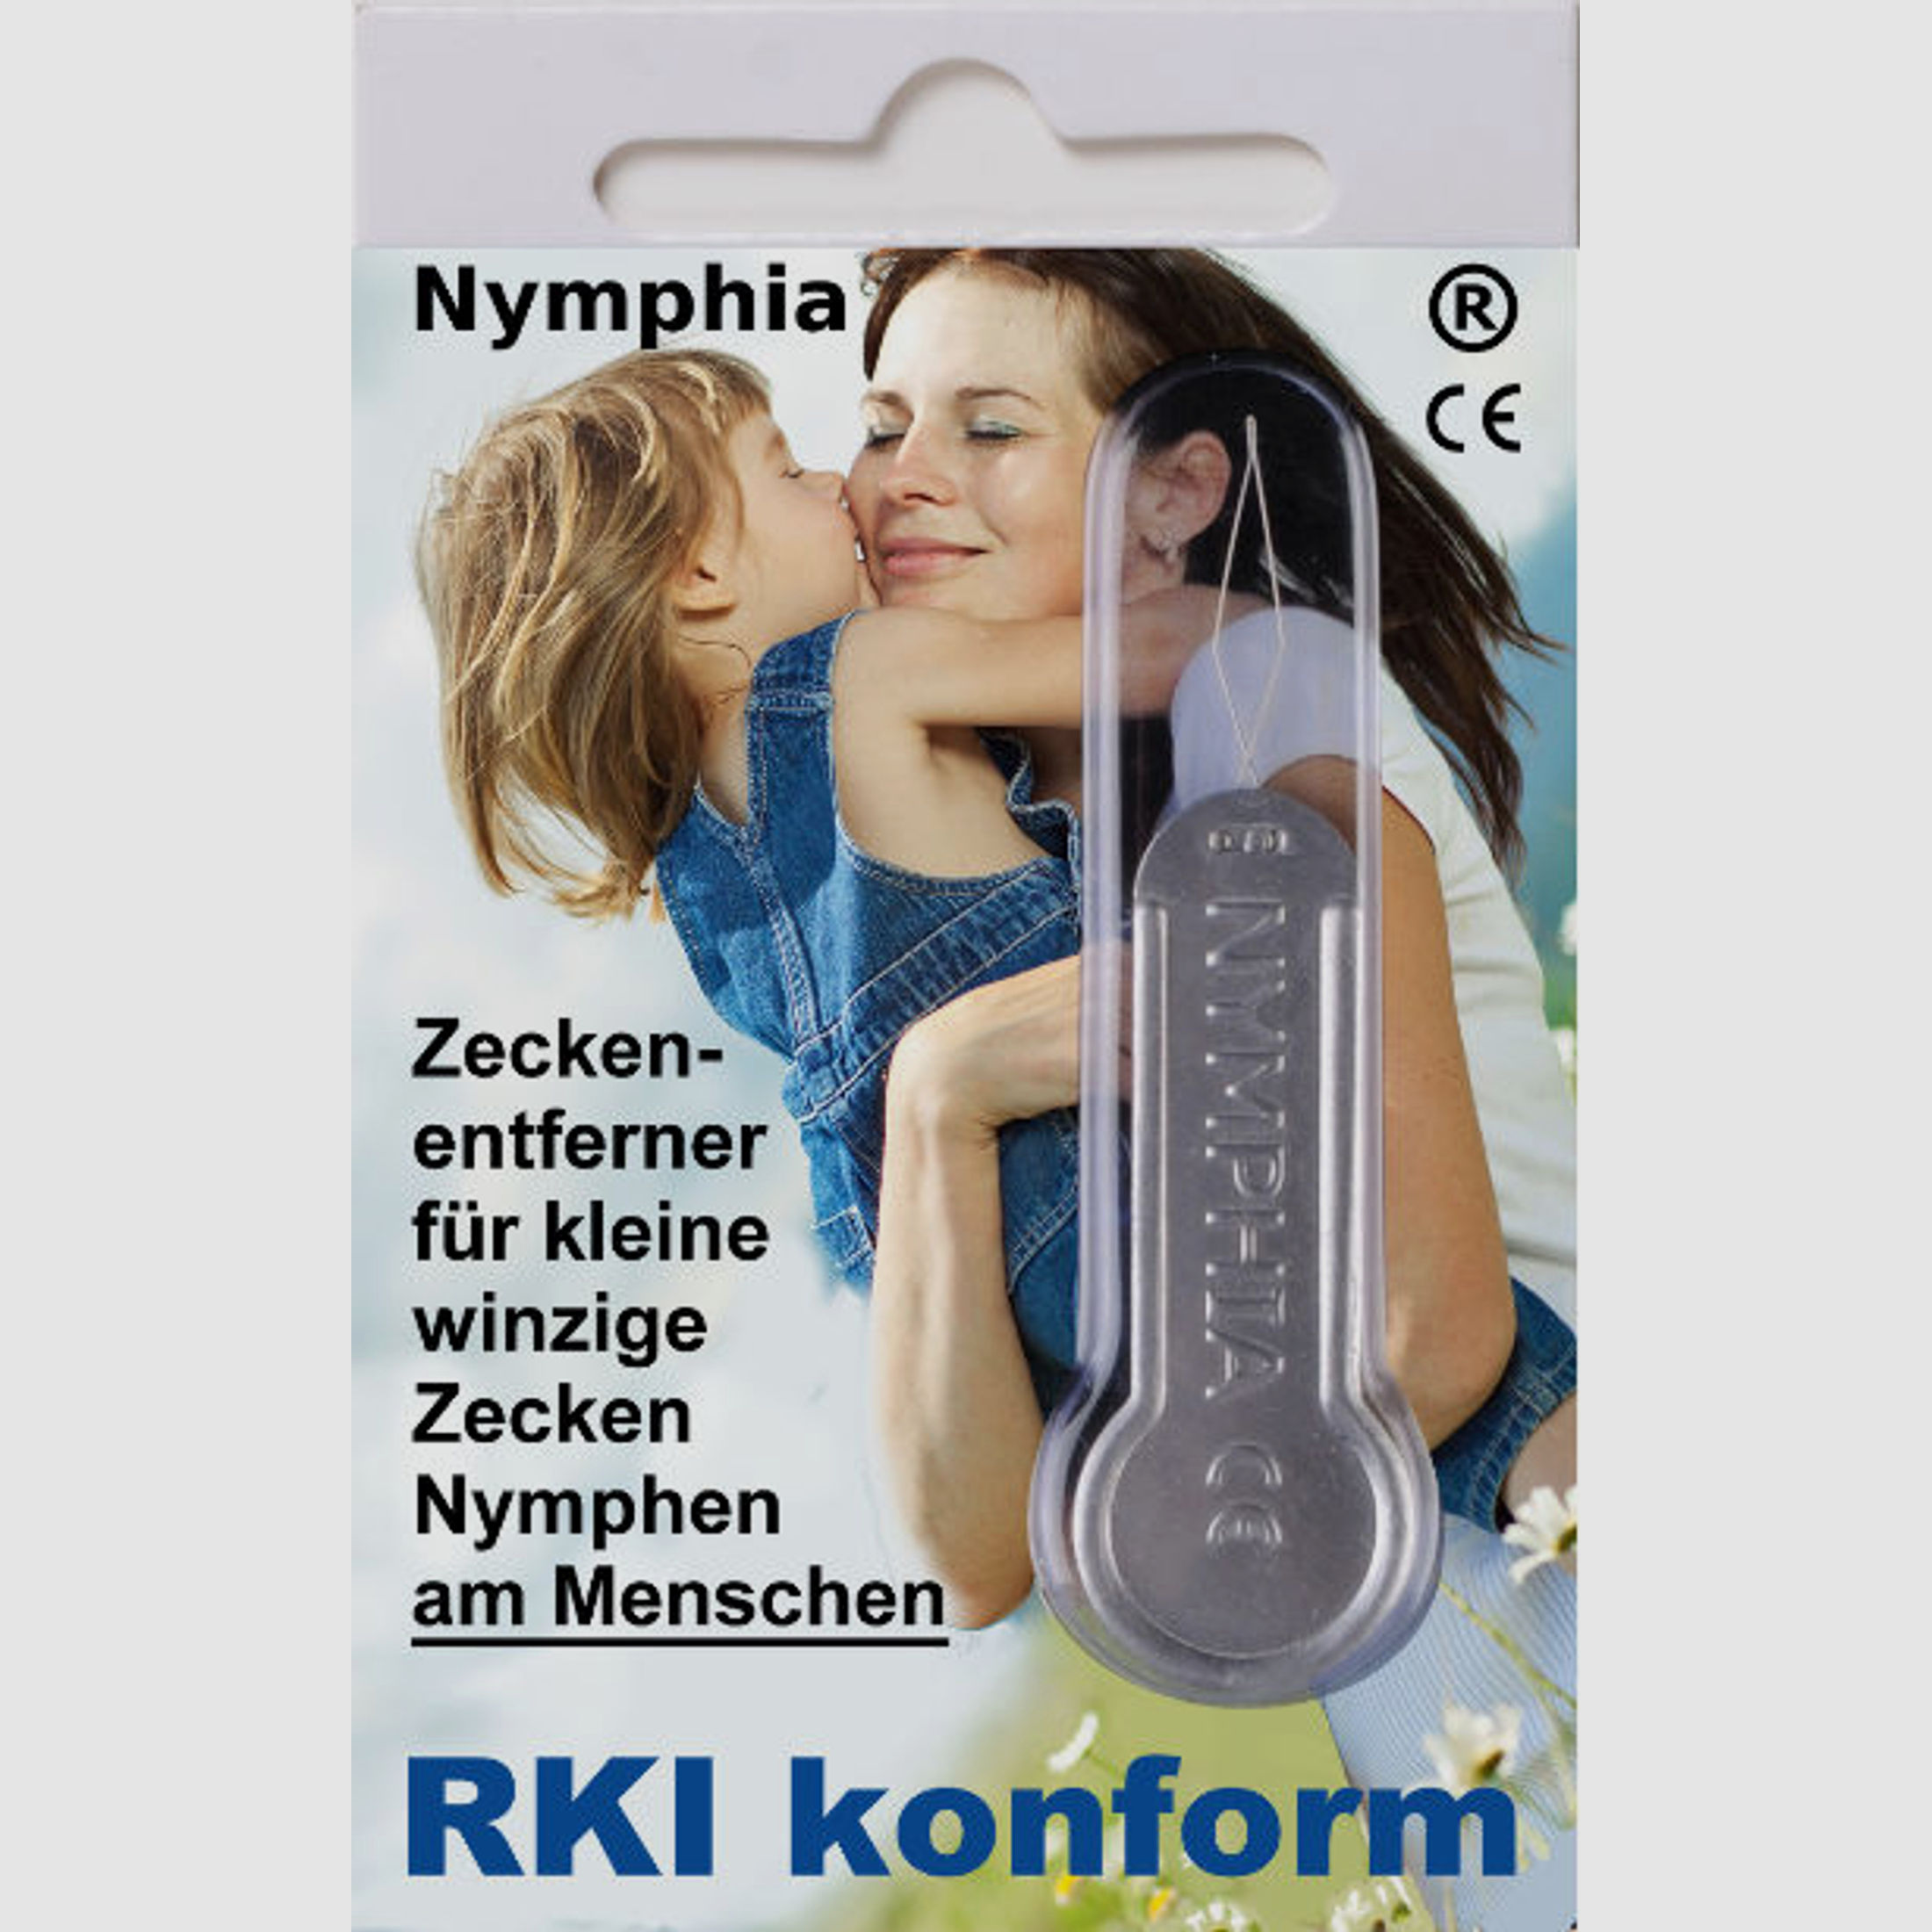 Nymphia Nymphia Zeckenentfernung